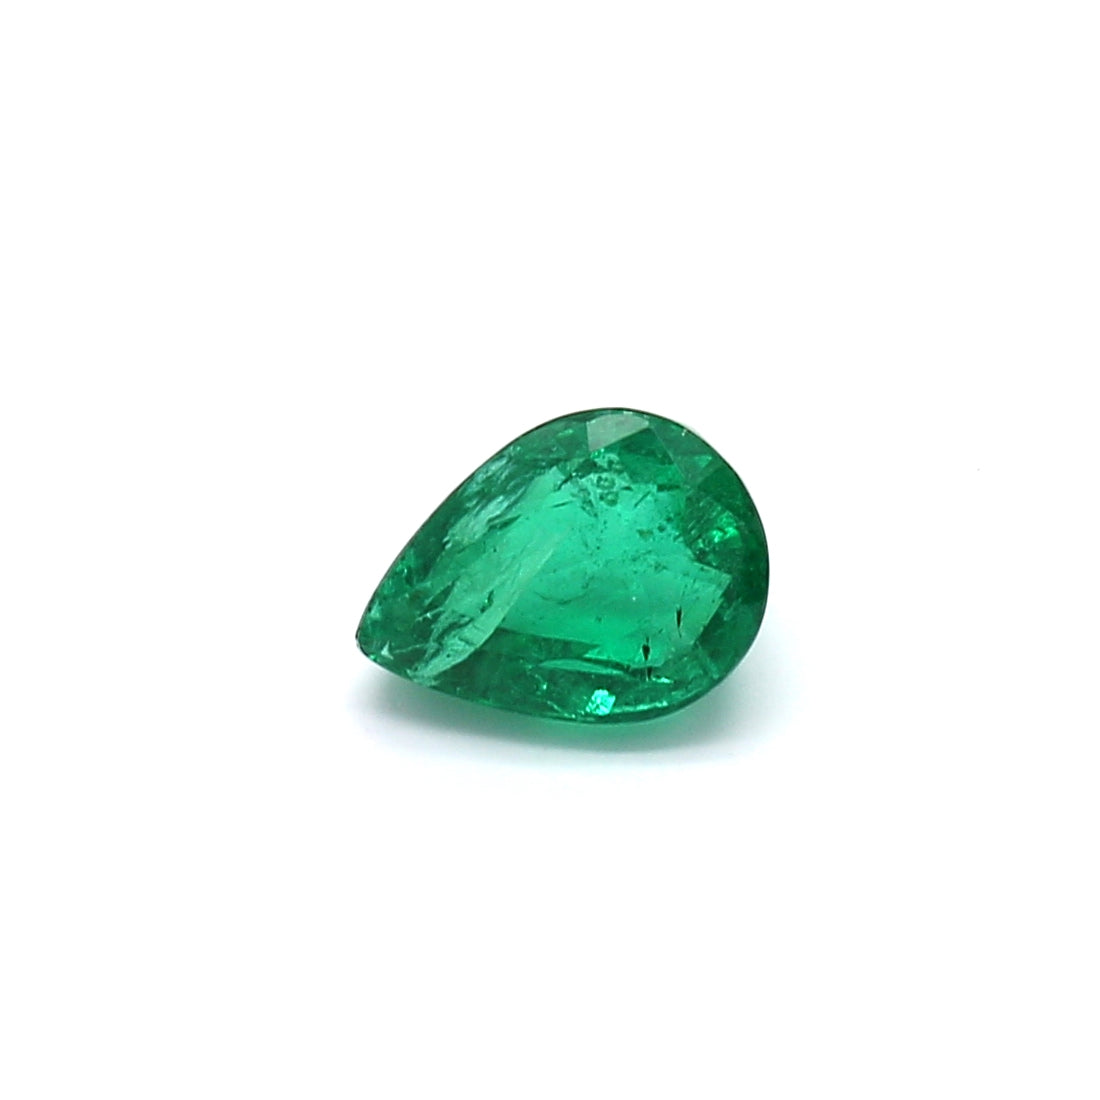 0.98ct Pear Shape Emerald, Minor Oil, Ethiopia - 7.43 x 5.50 x 3.86mm